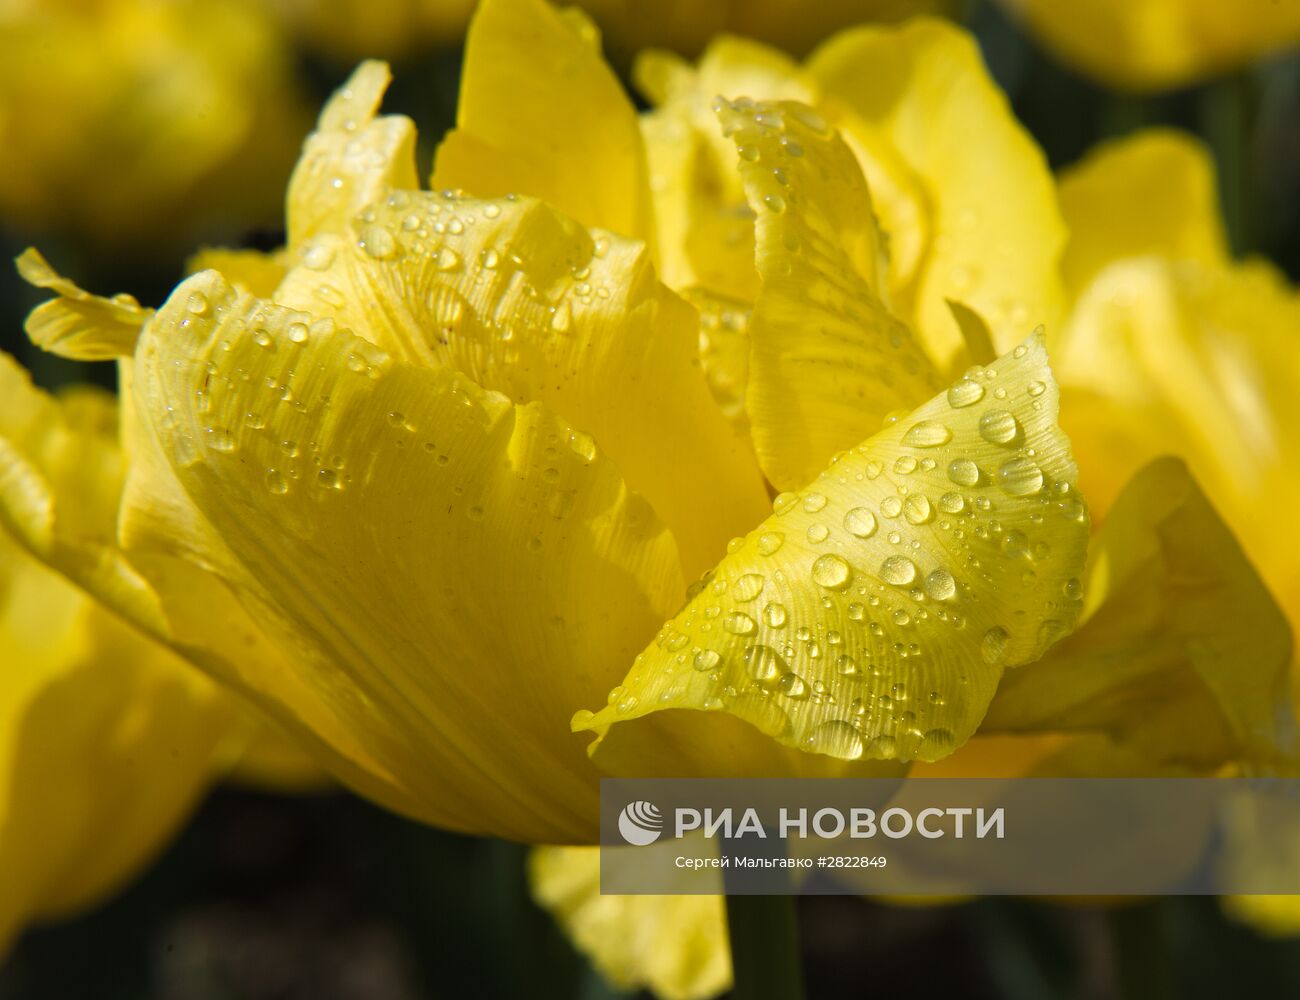 "Парад тюльпанов 2016" в Крыму